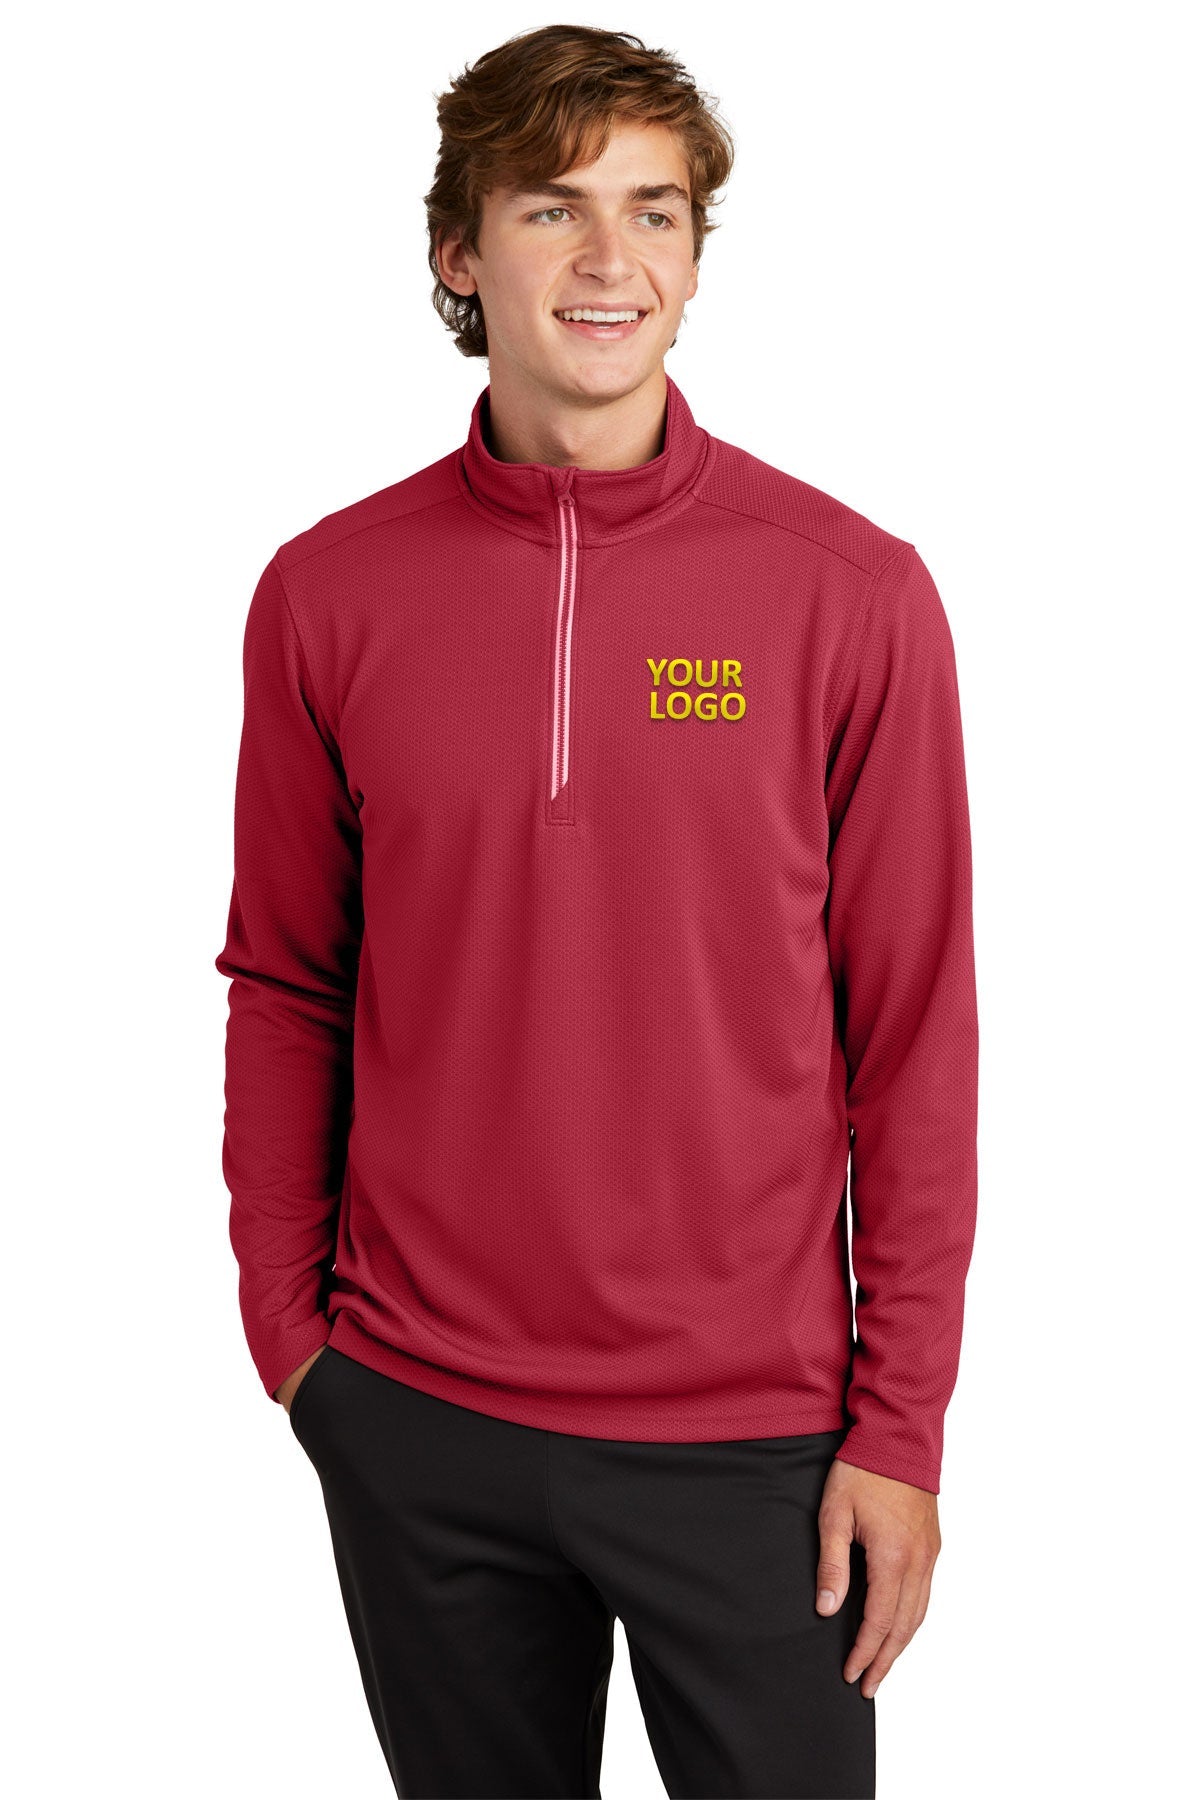 Sport-Tek Deep Red ST860 sweatshirts with logo printed